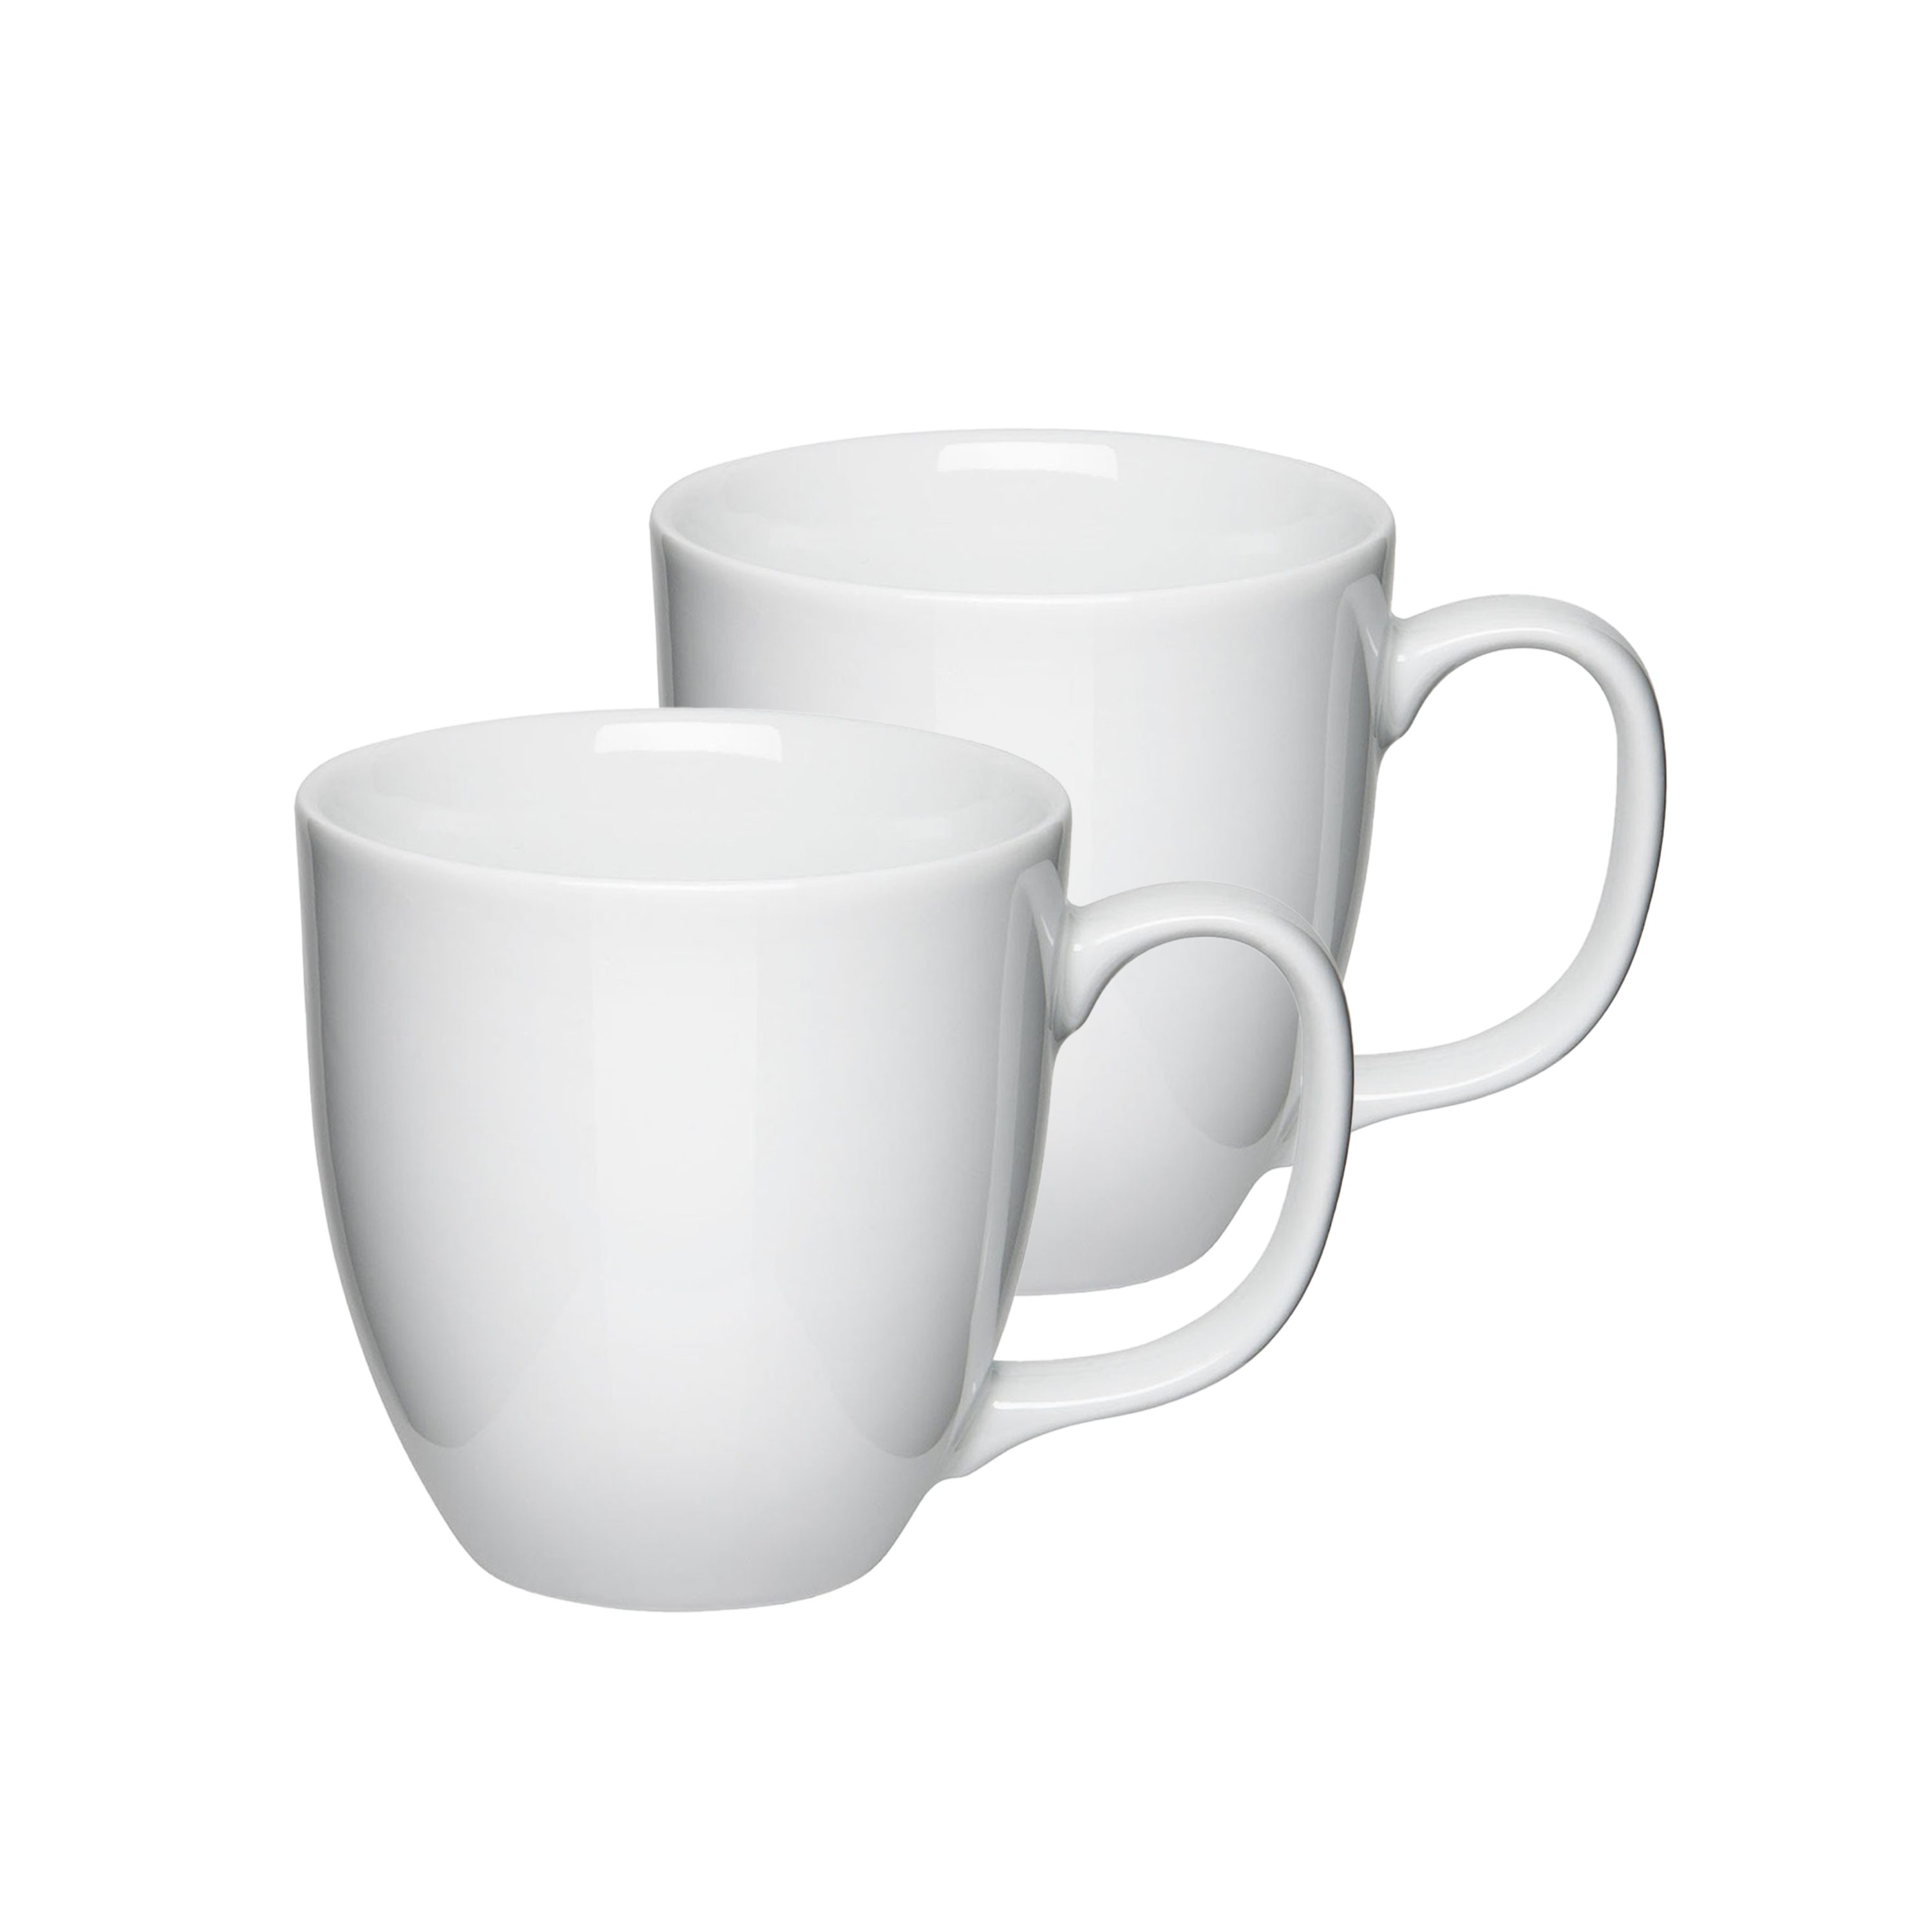 Mahlwerck Manufaktur Tasse »Jumbotasse«, Porzellan, 2er Set, glänzend, 400  - 450 ml online kaufen | OTTO